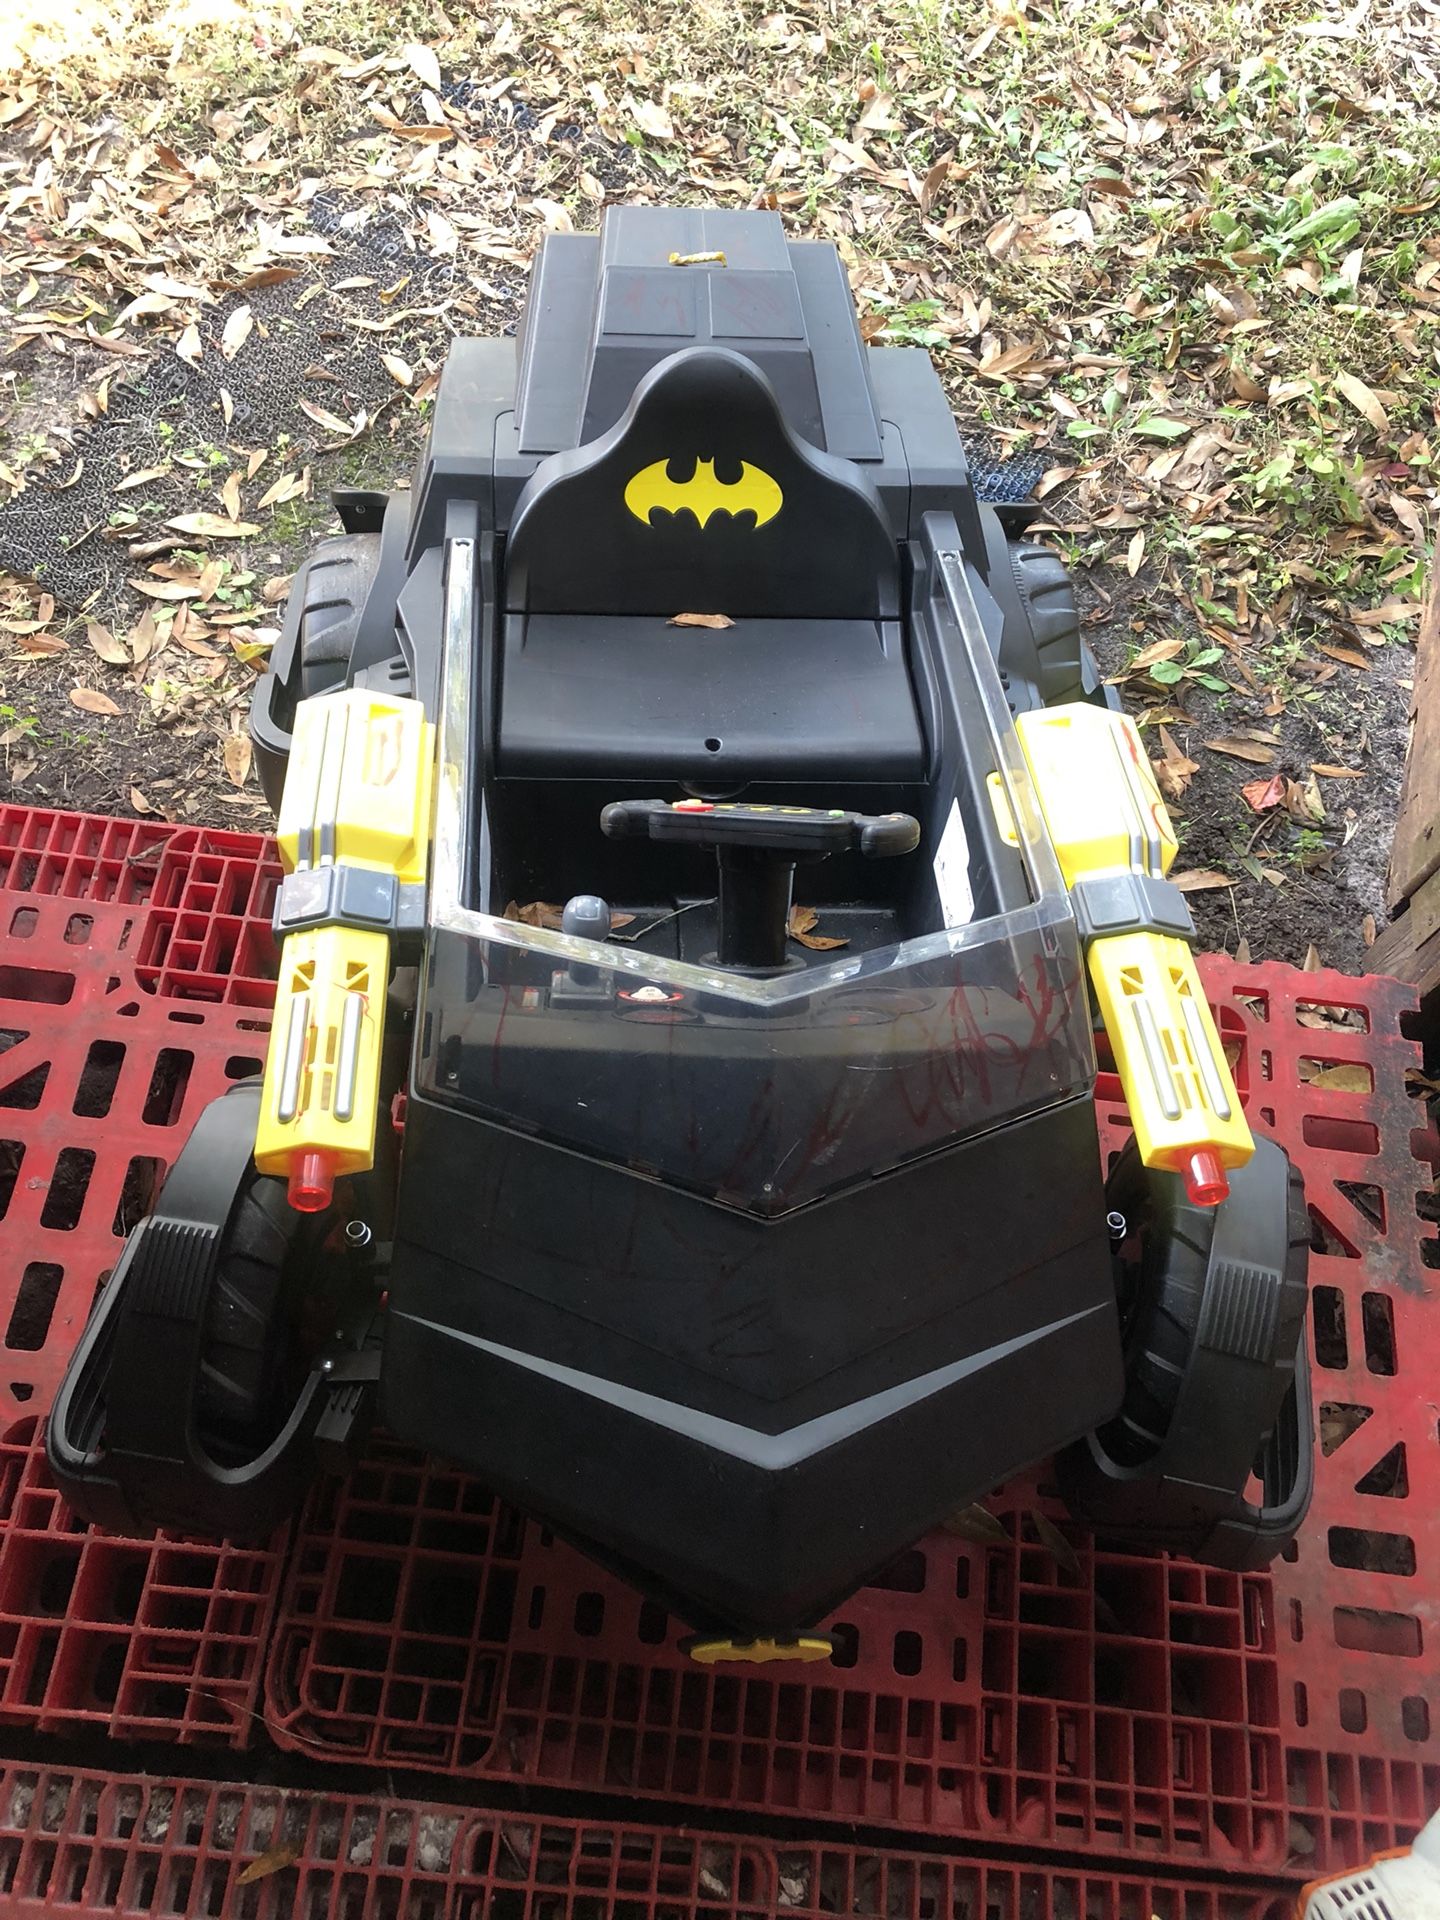 Batman power car